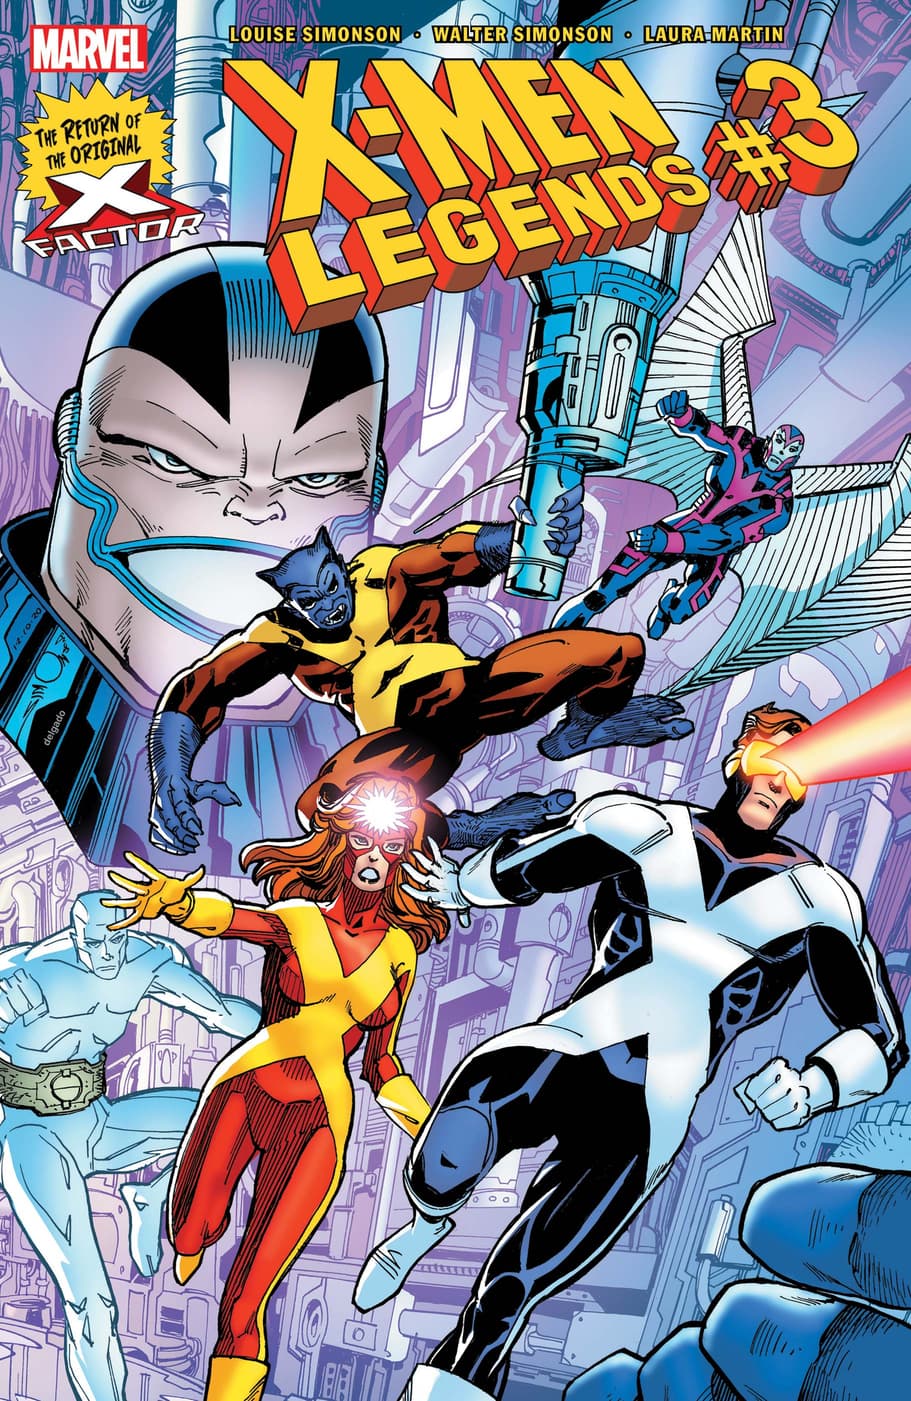 X-MEN LEGENDS #3 cover by Walter Simonson